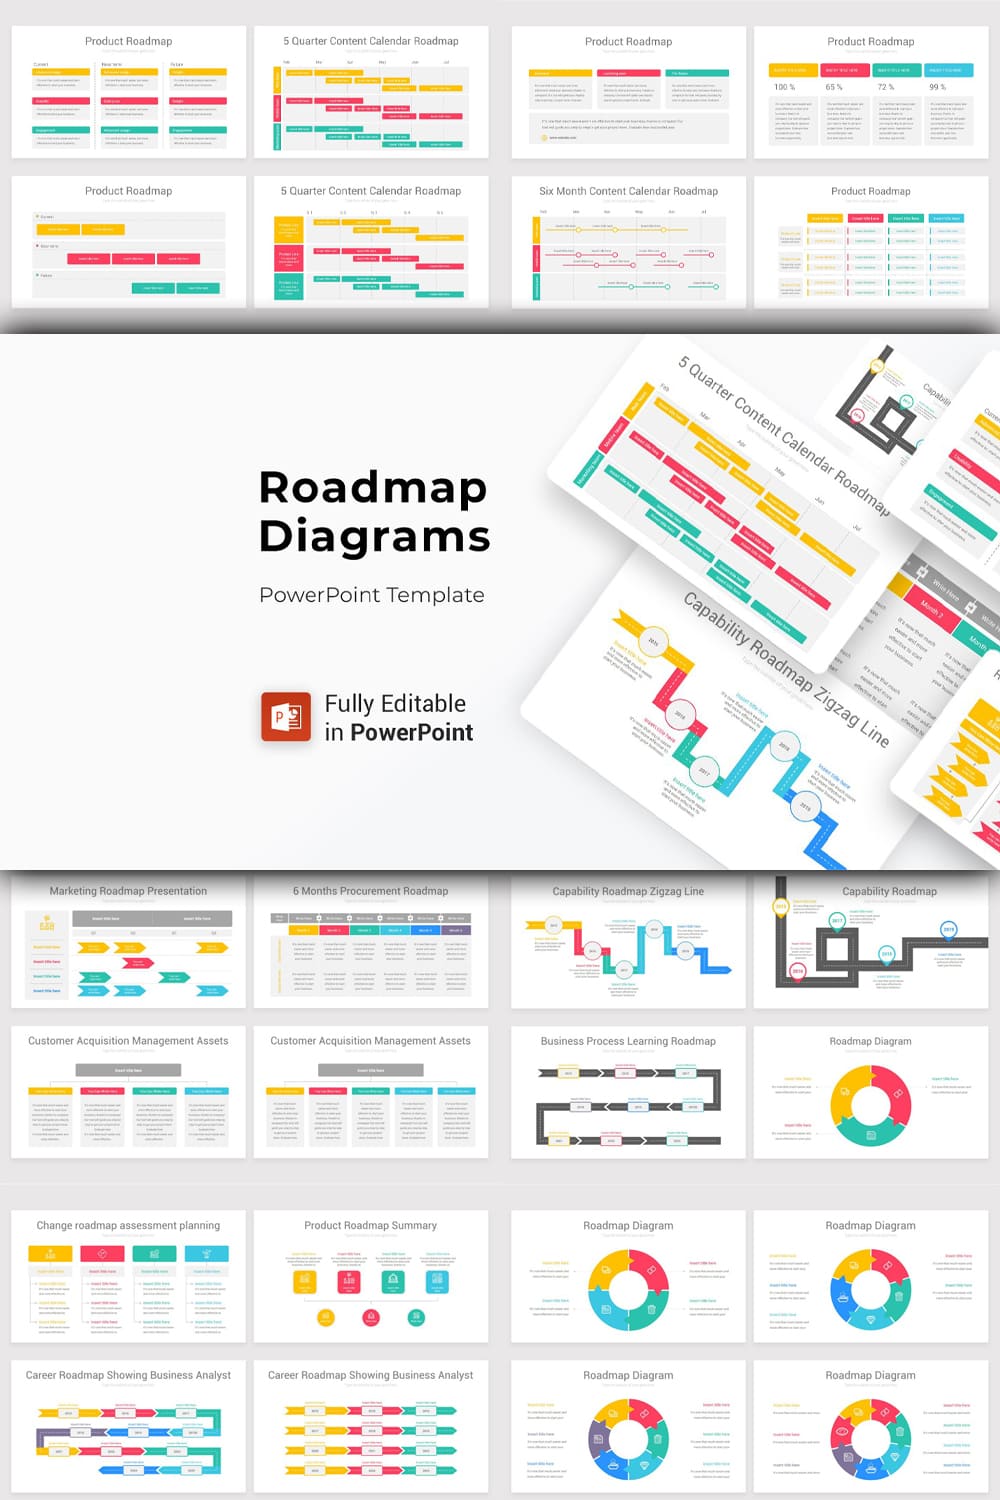 Roadmap Diagrams PowerPoint Template pinterest image.